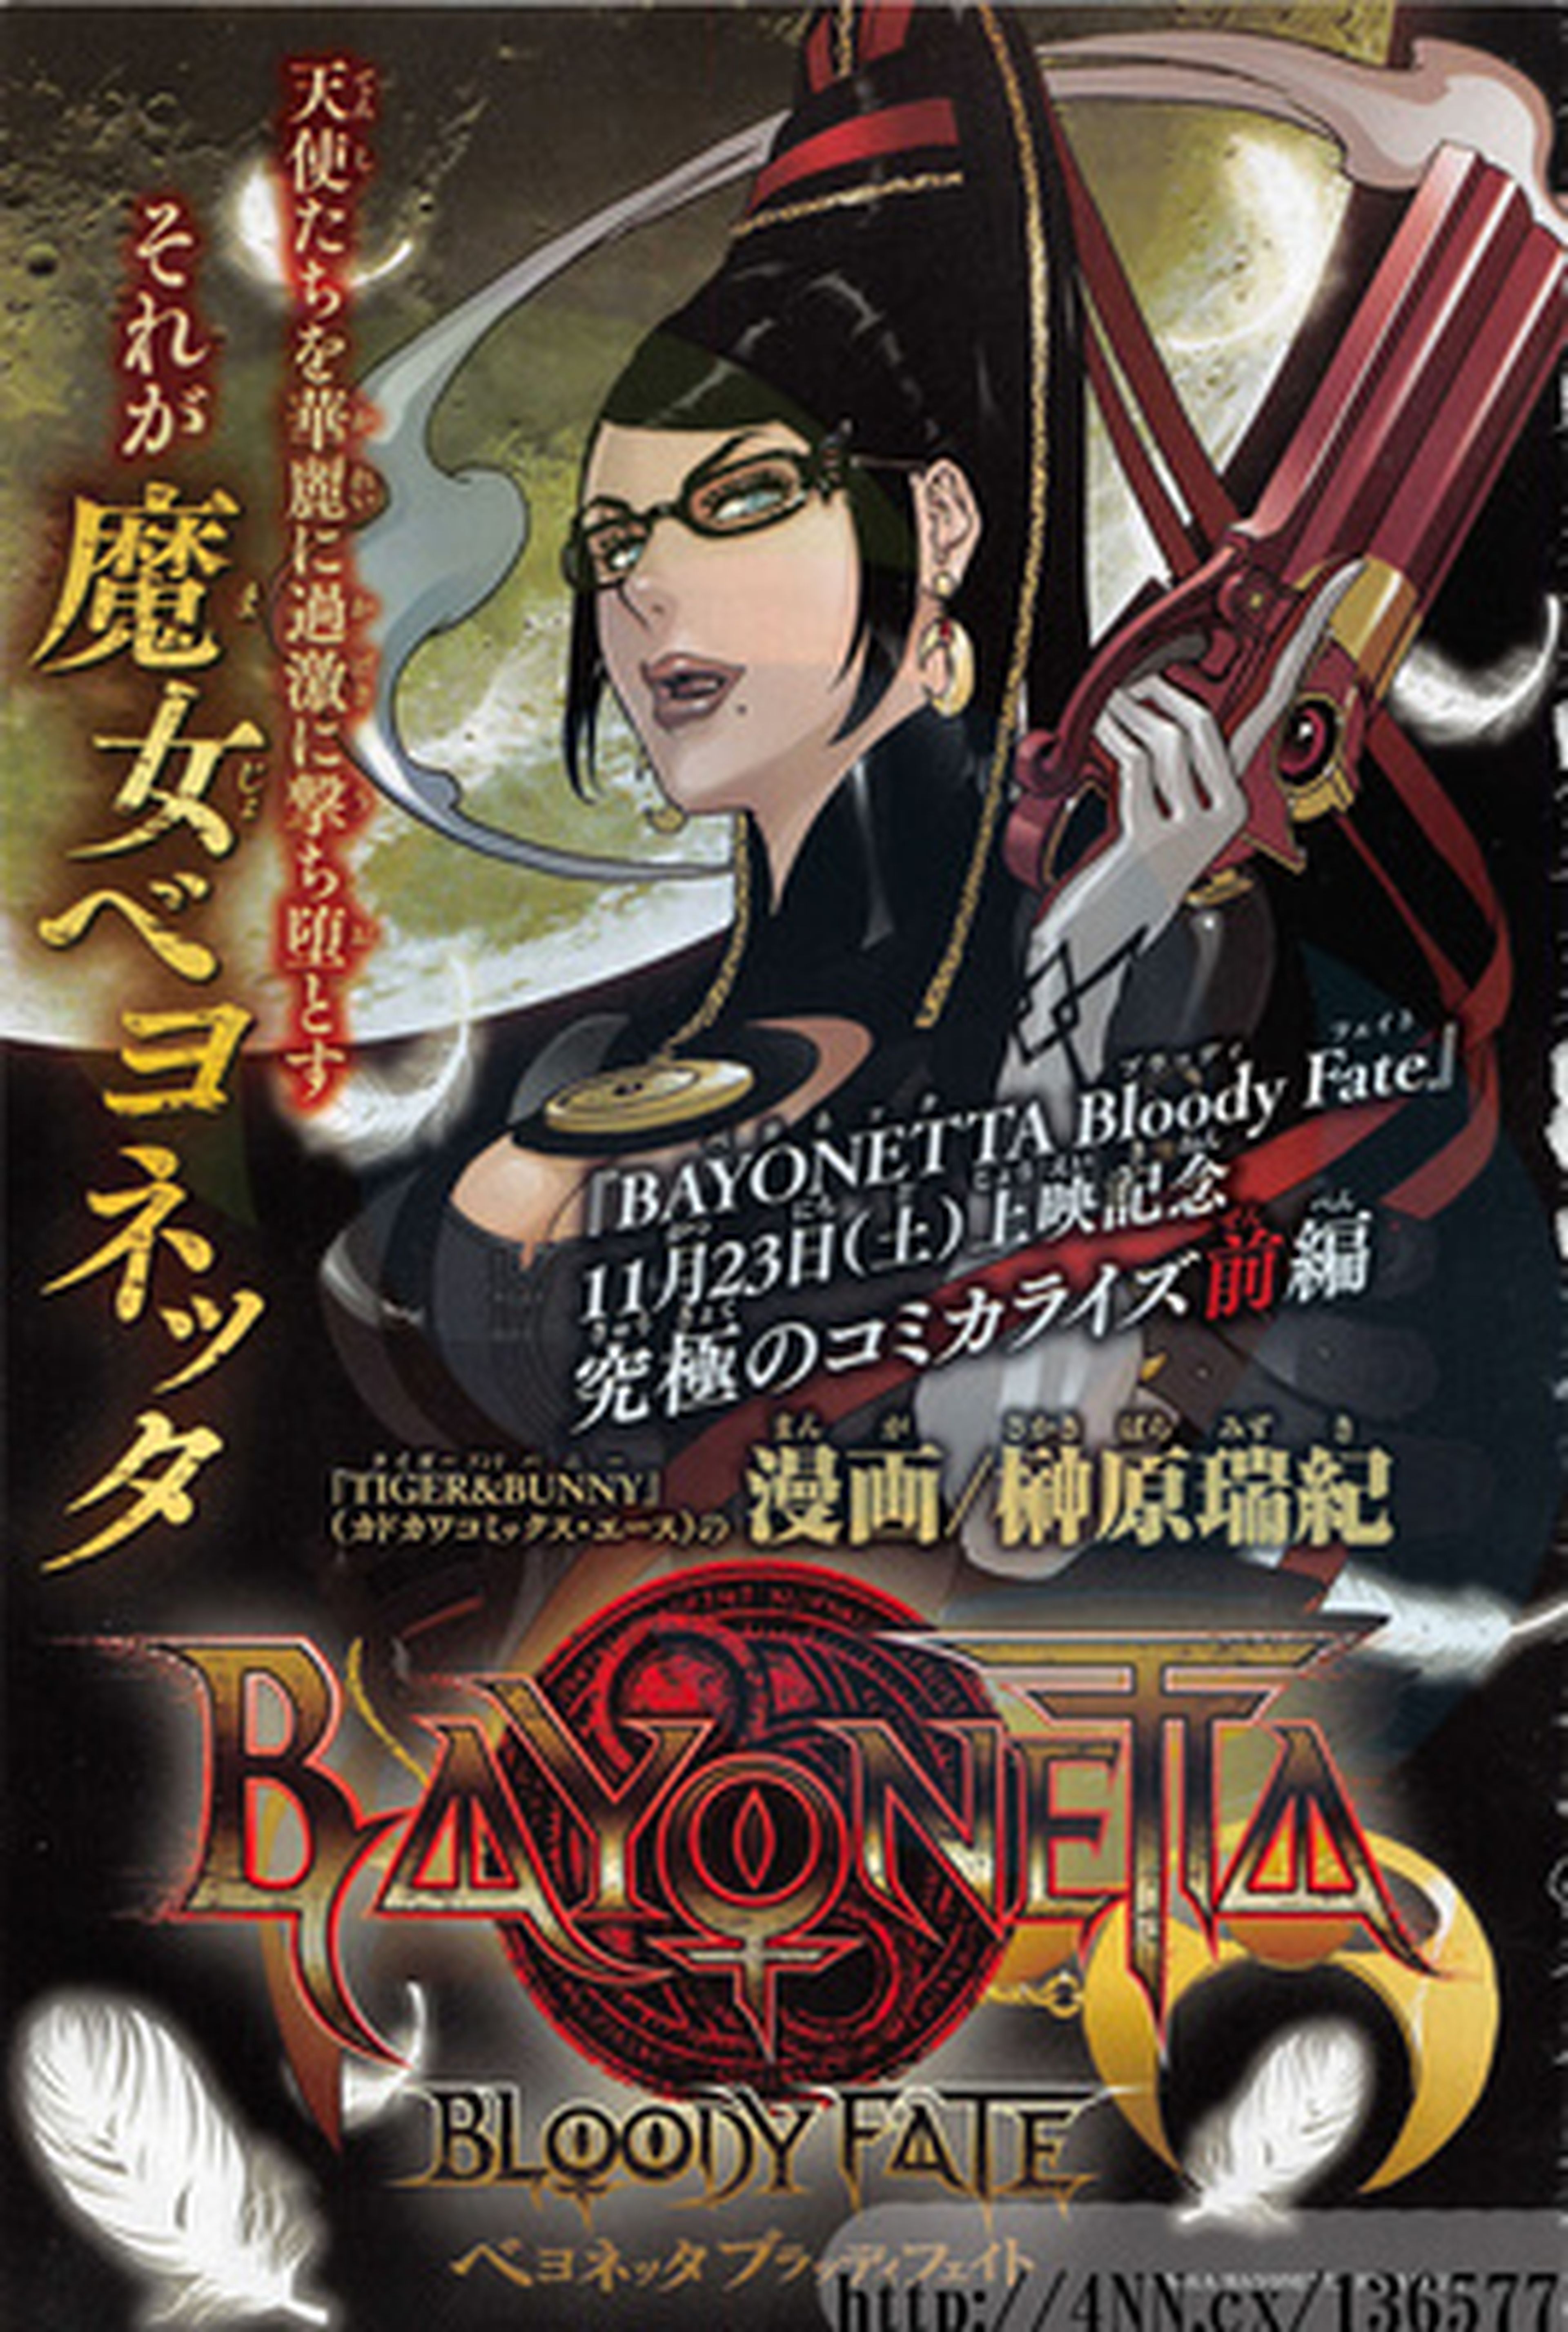 La película de Bayonetta tiene manga